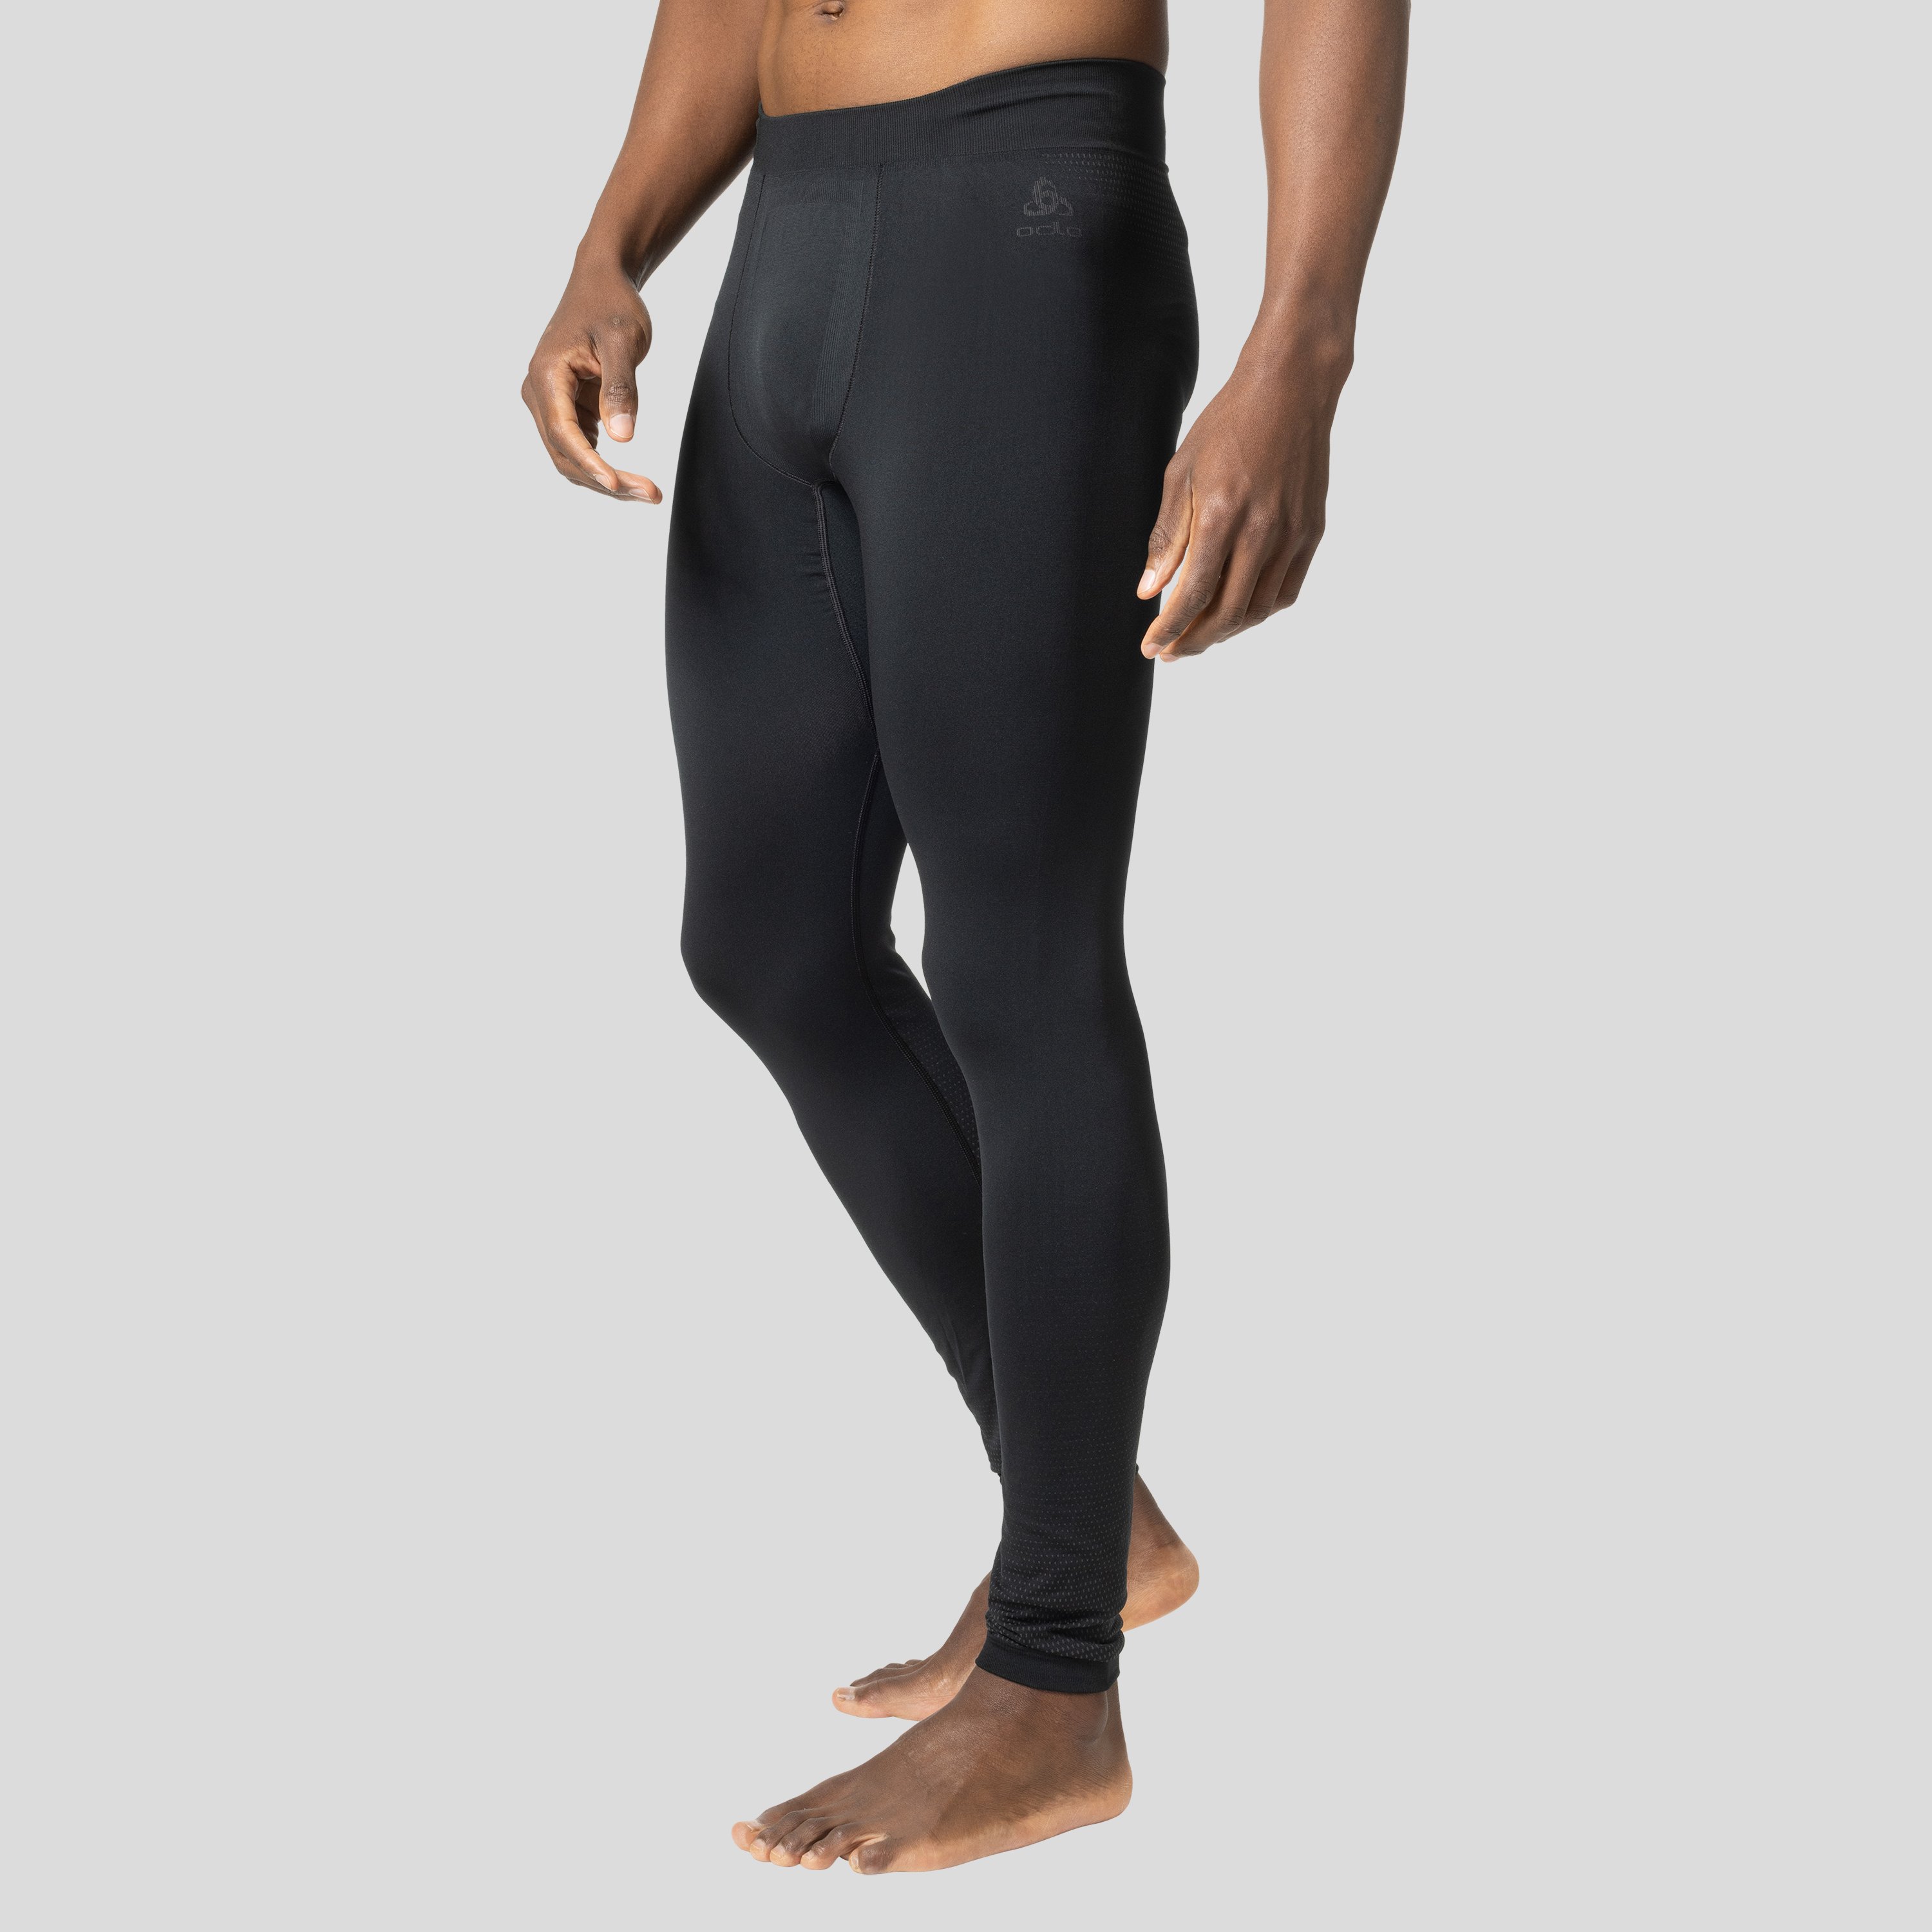 ODLO Performance Light Base-Layer-Pants für Herren, M, schwarz